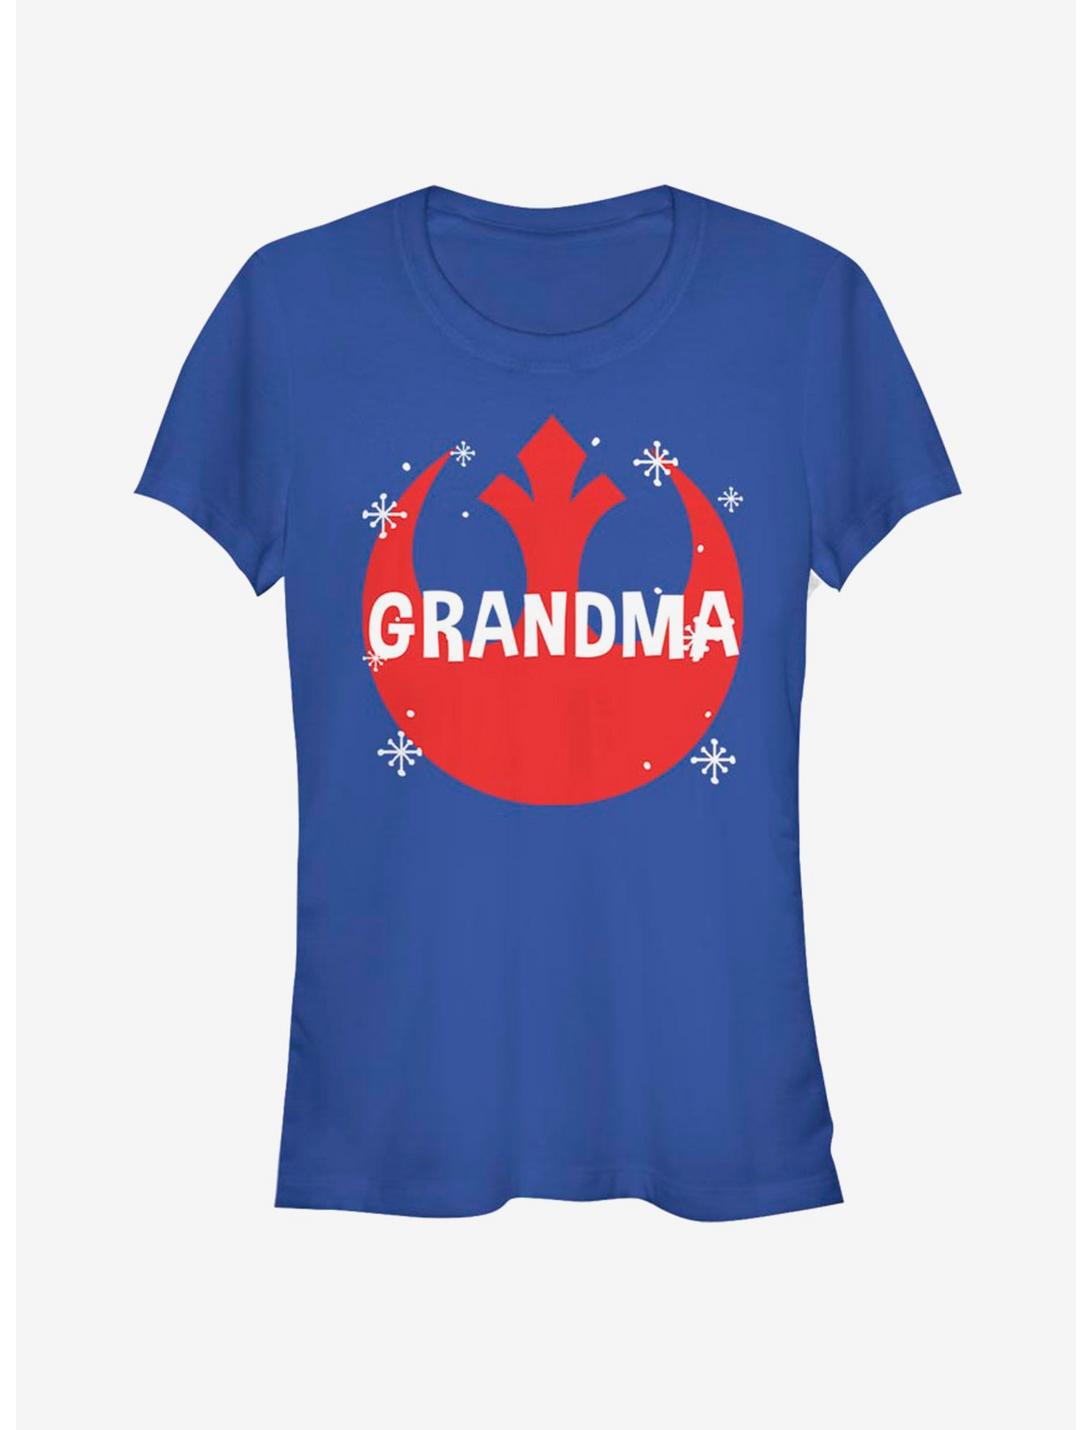 Star Wars Overlay Grandma Girls T-Shirt, ROYAL, hi-res